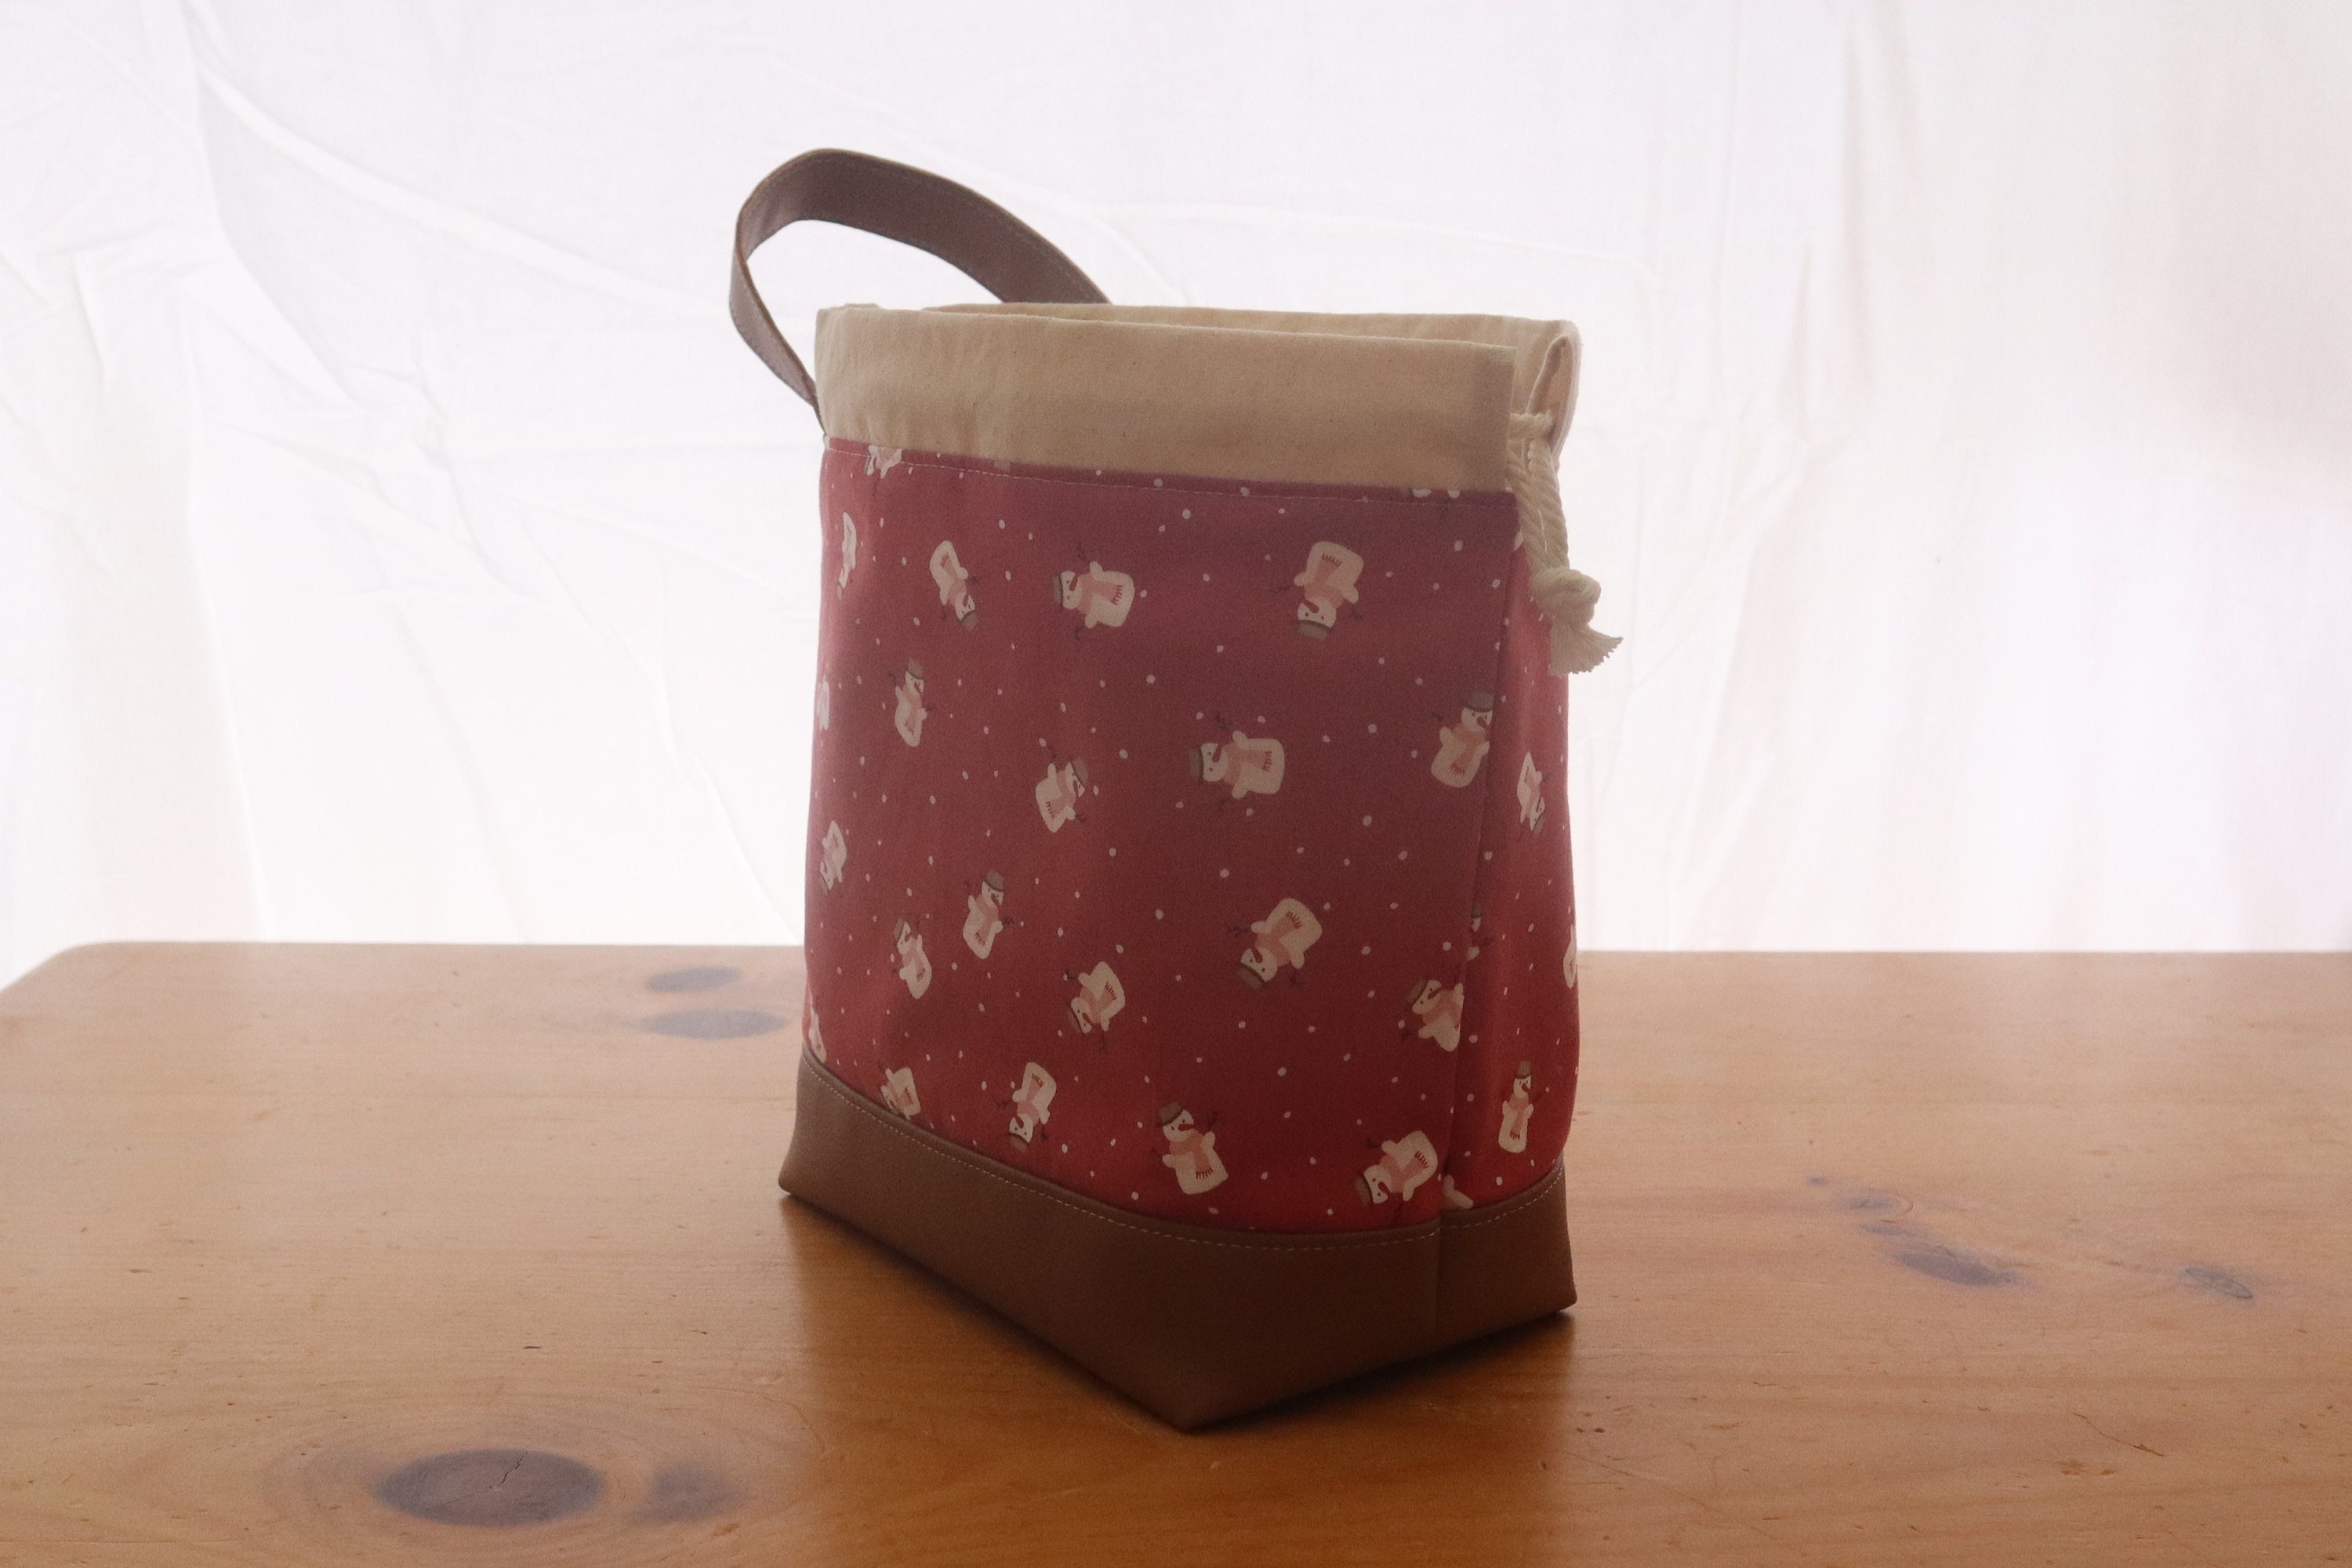 SDIVADesigns Project Bags (Small) | knittingthestash